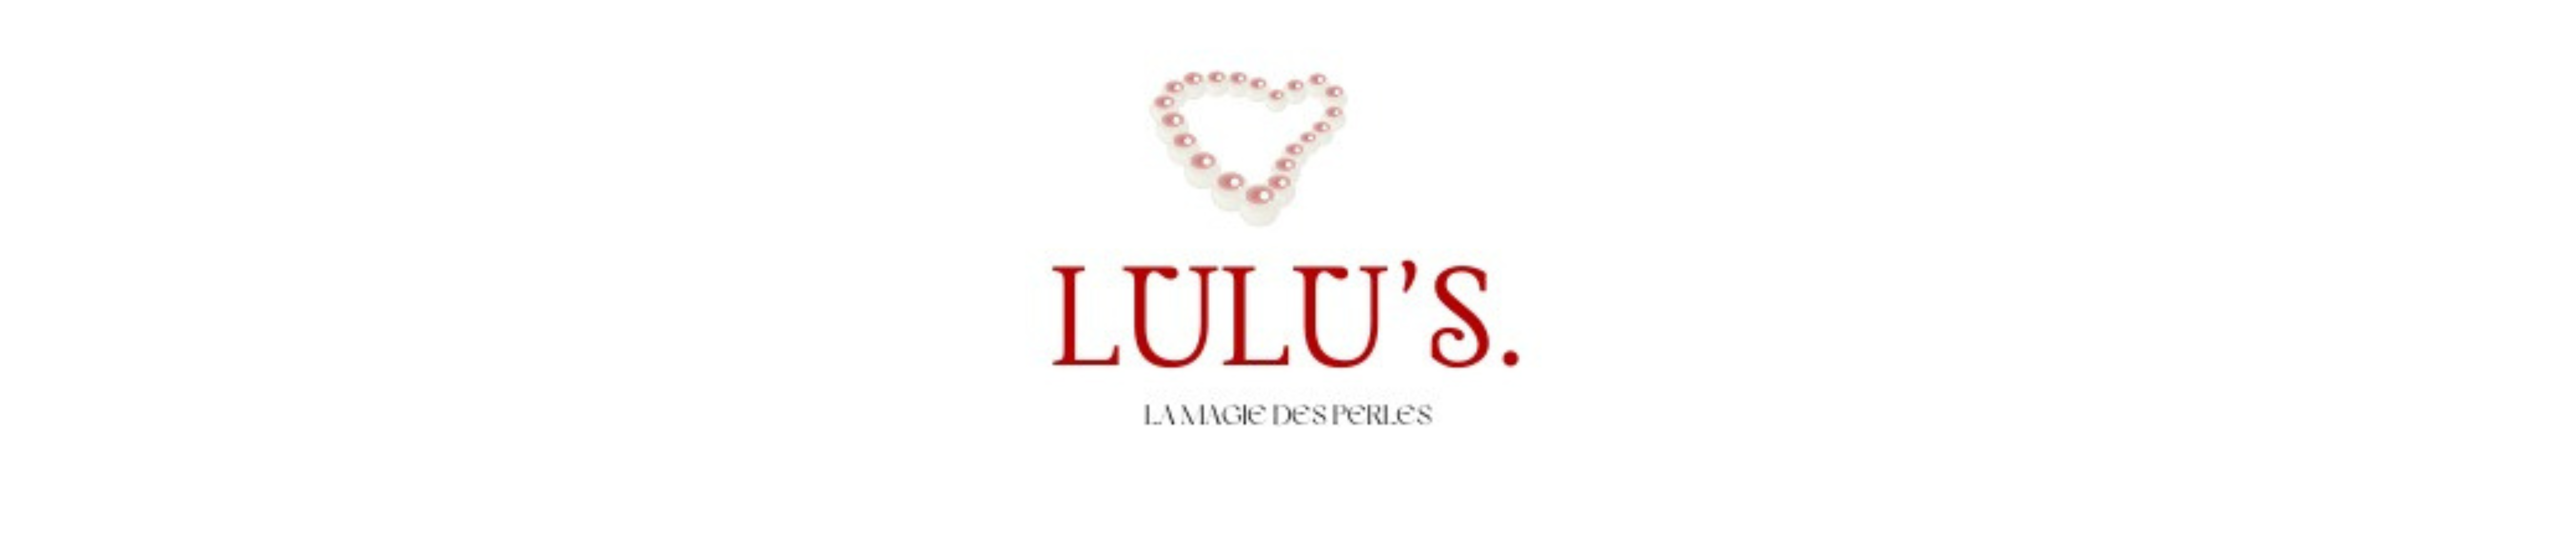 Lulu’s